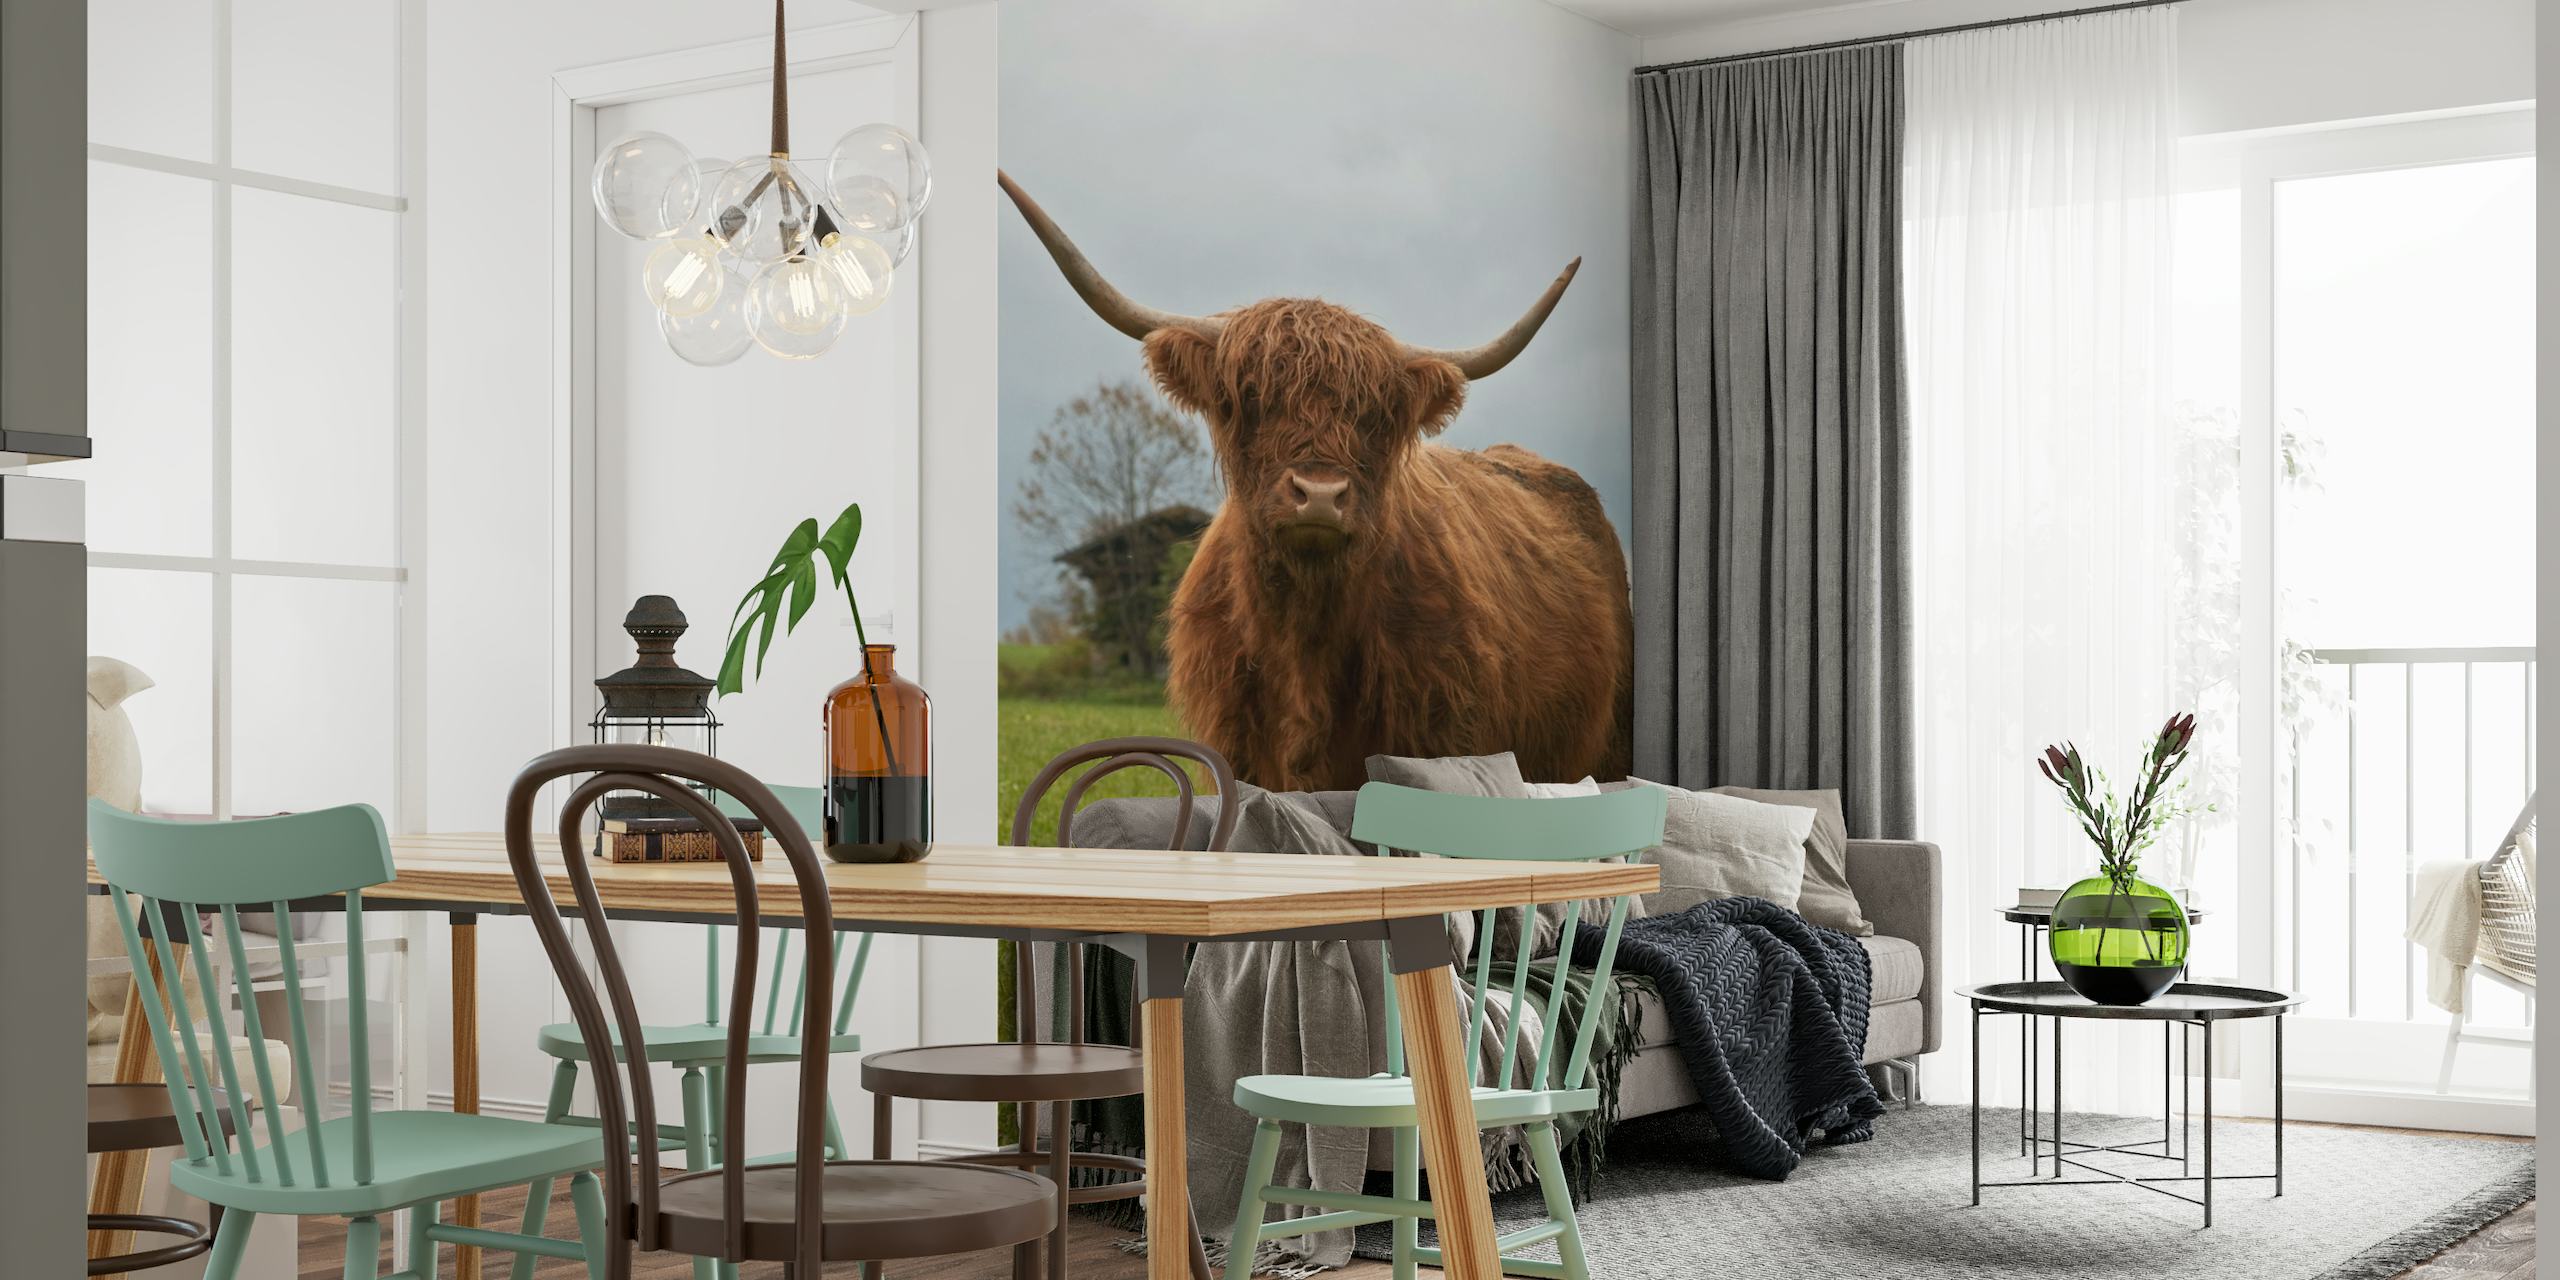 Highland Cow 4 wallpaper